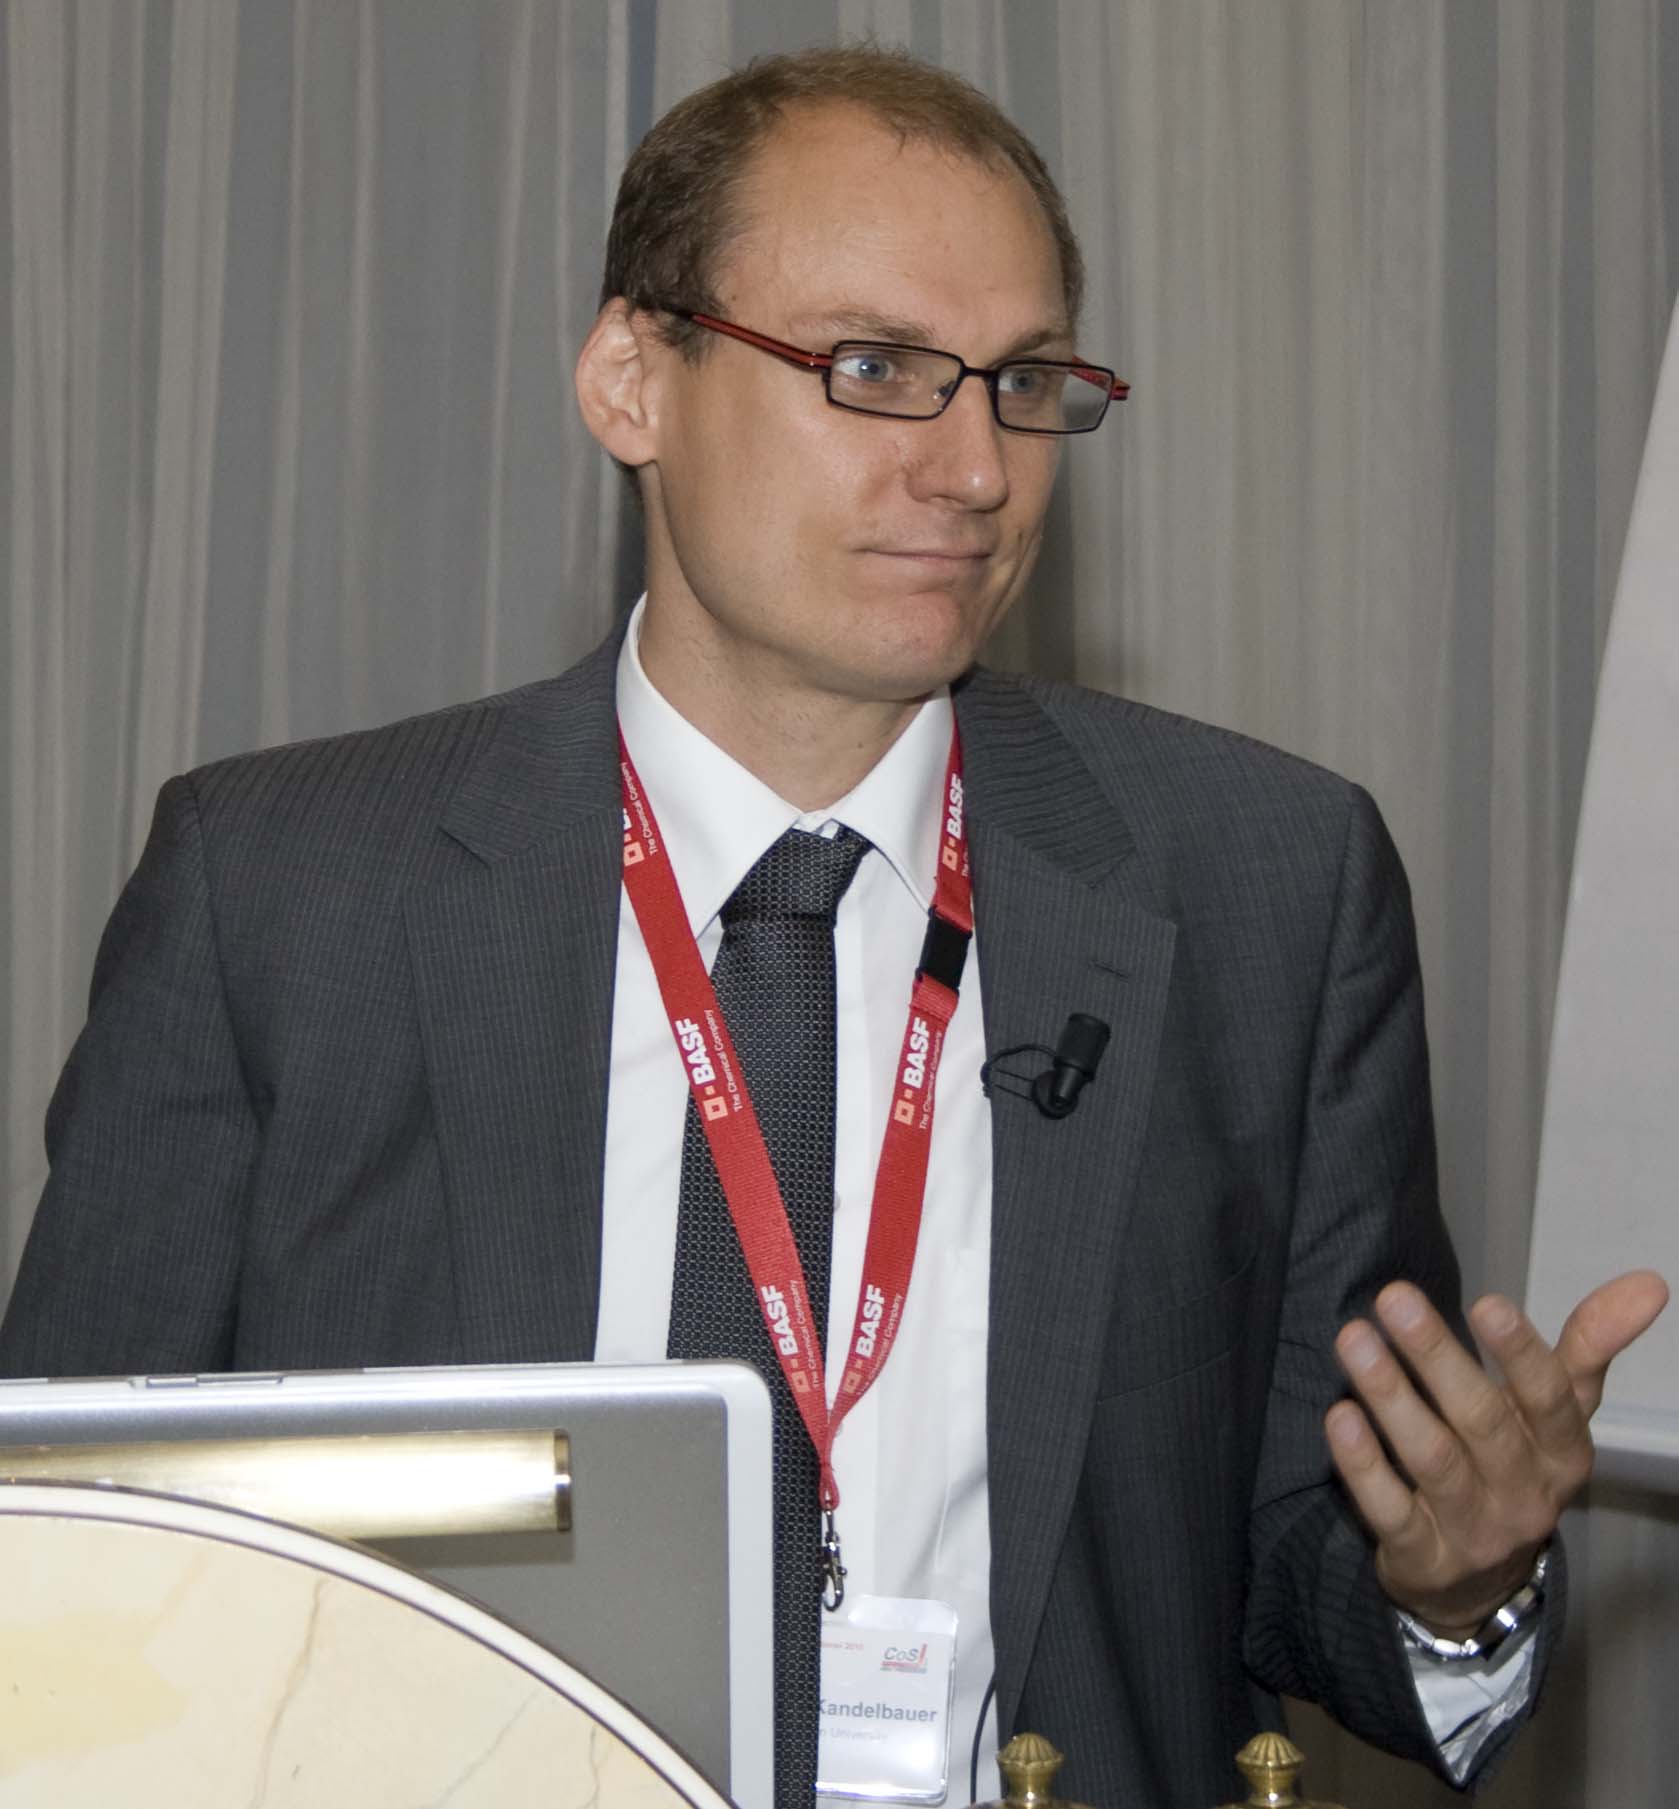 Professor Andreas Kandelbauer